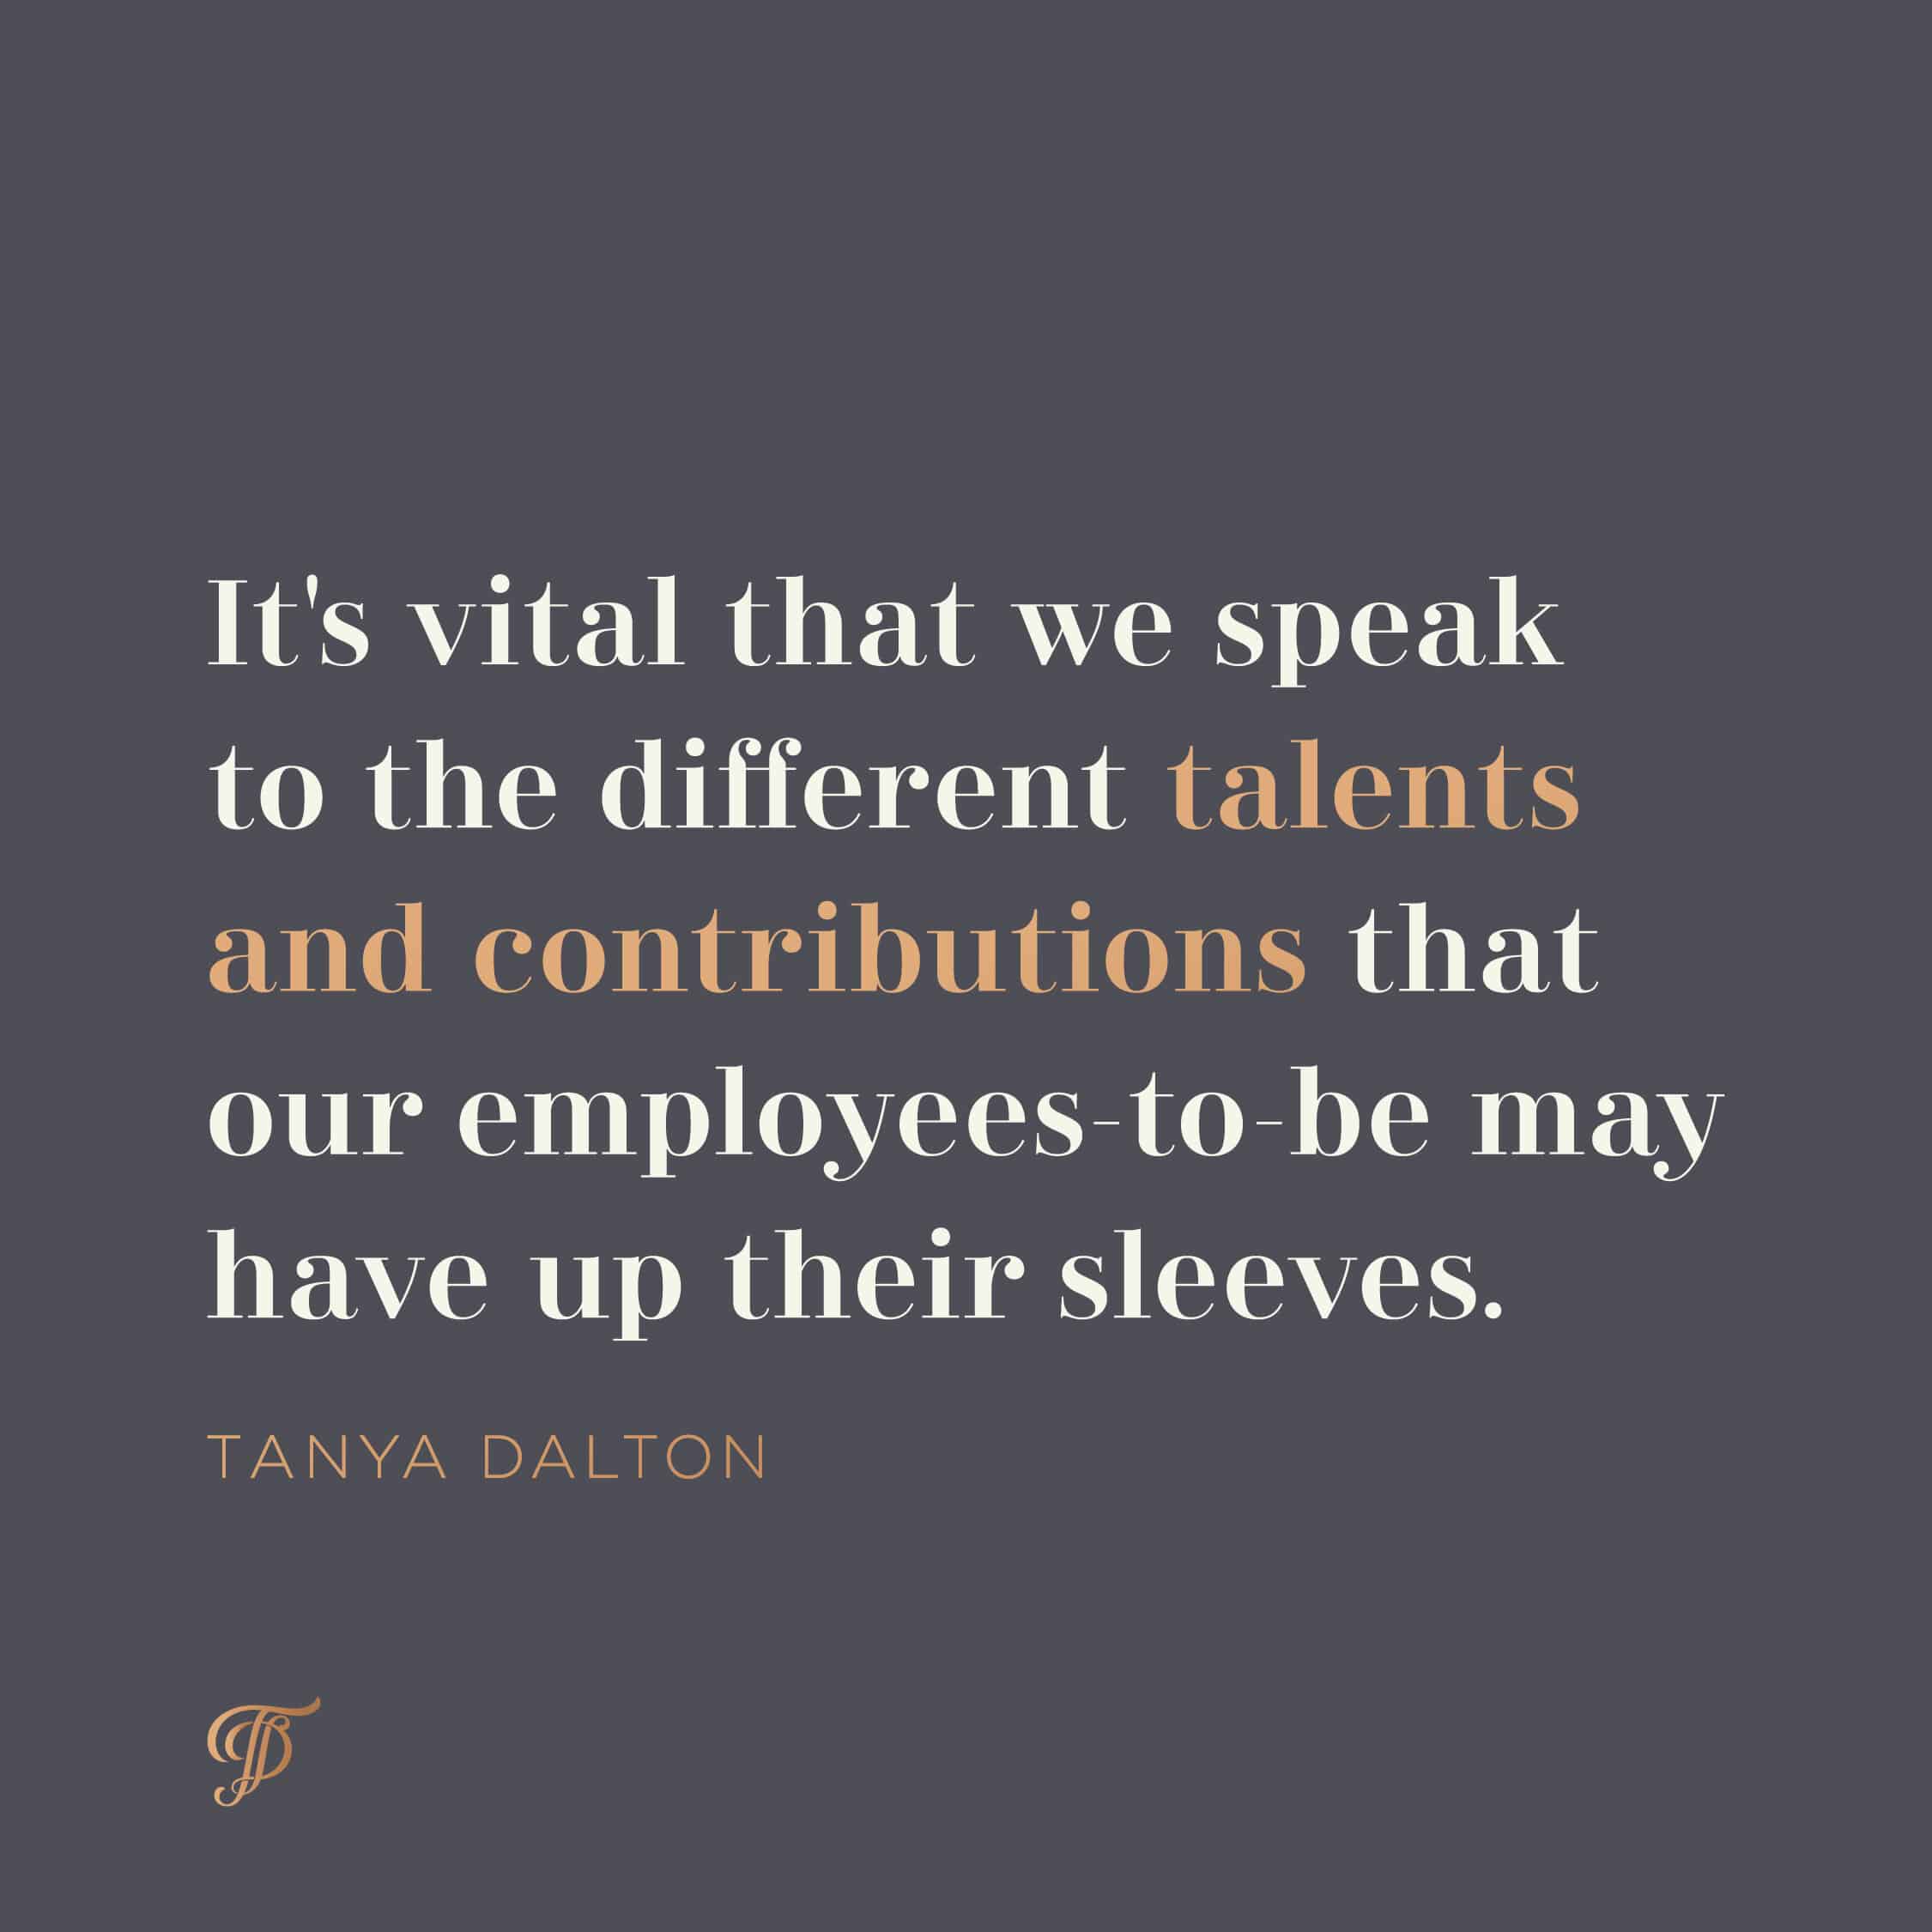 Tanya Dalton quote on teams and teamwork